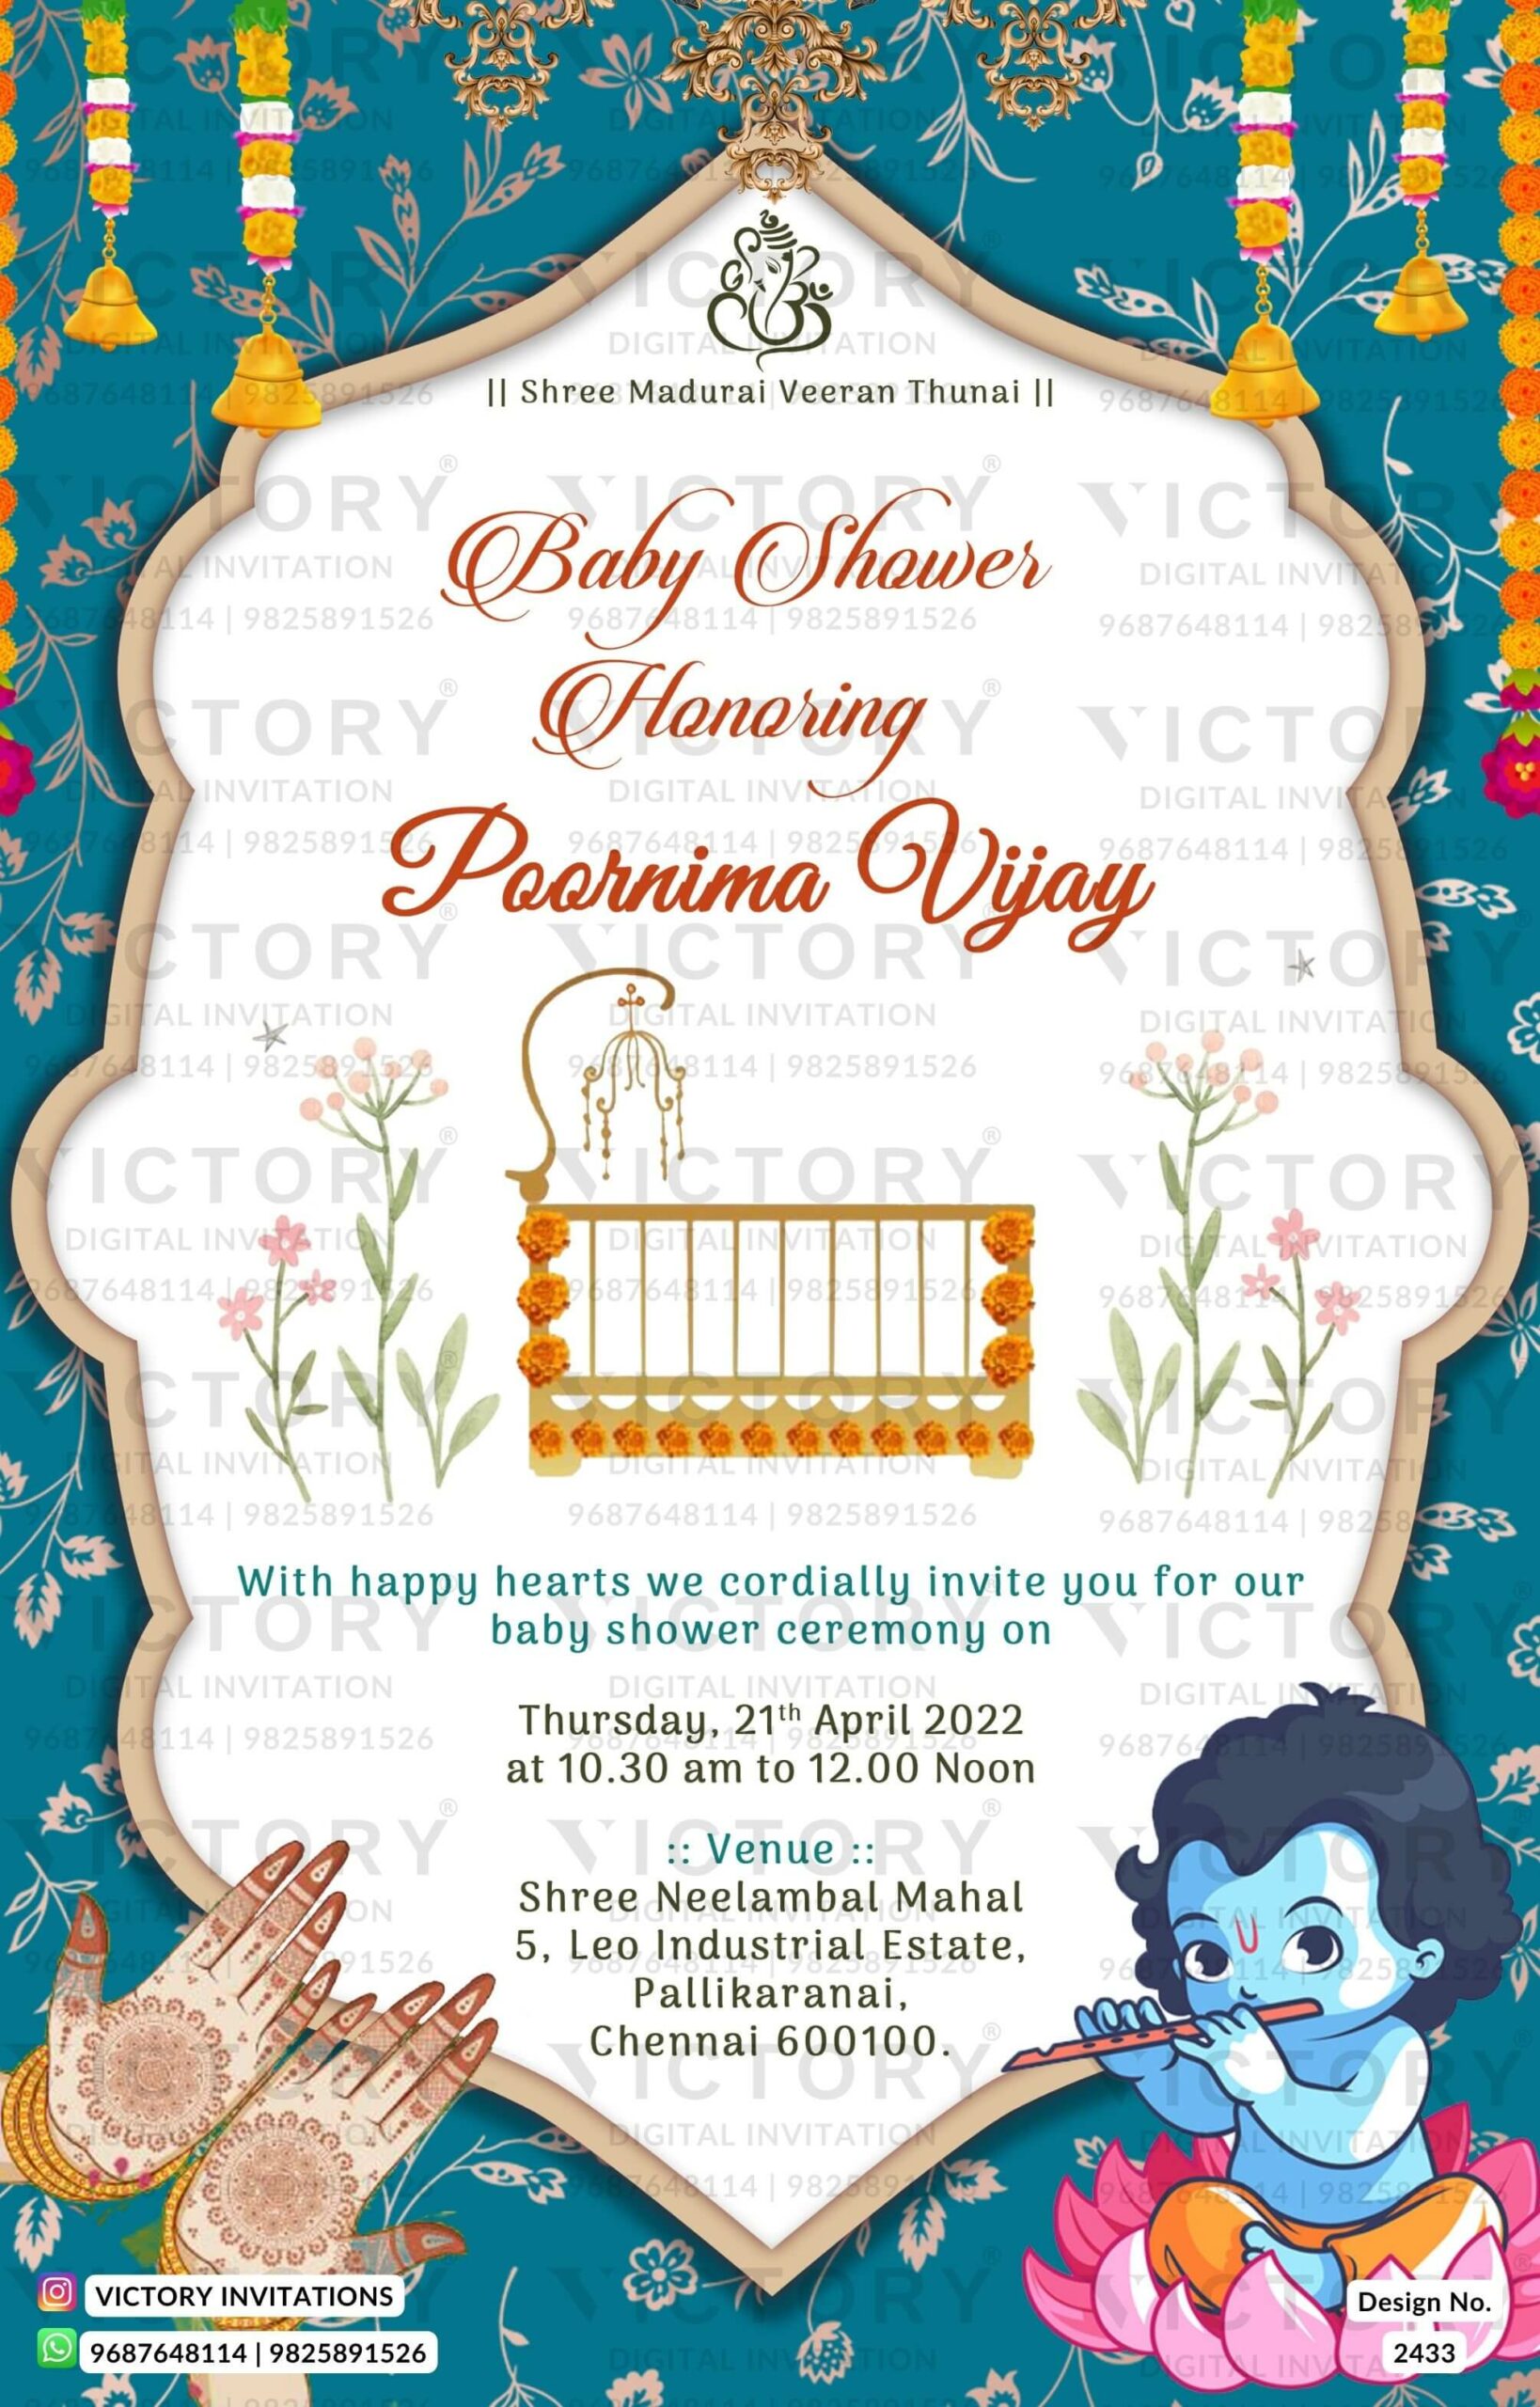 Baby Shower digital invitation card in english design no.2433